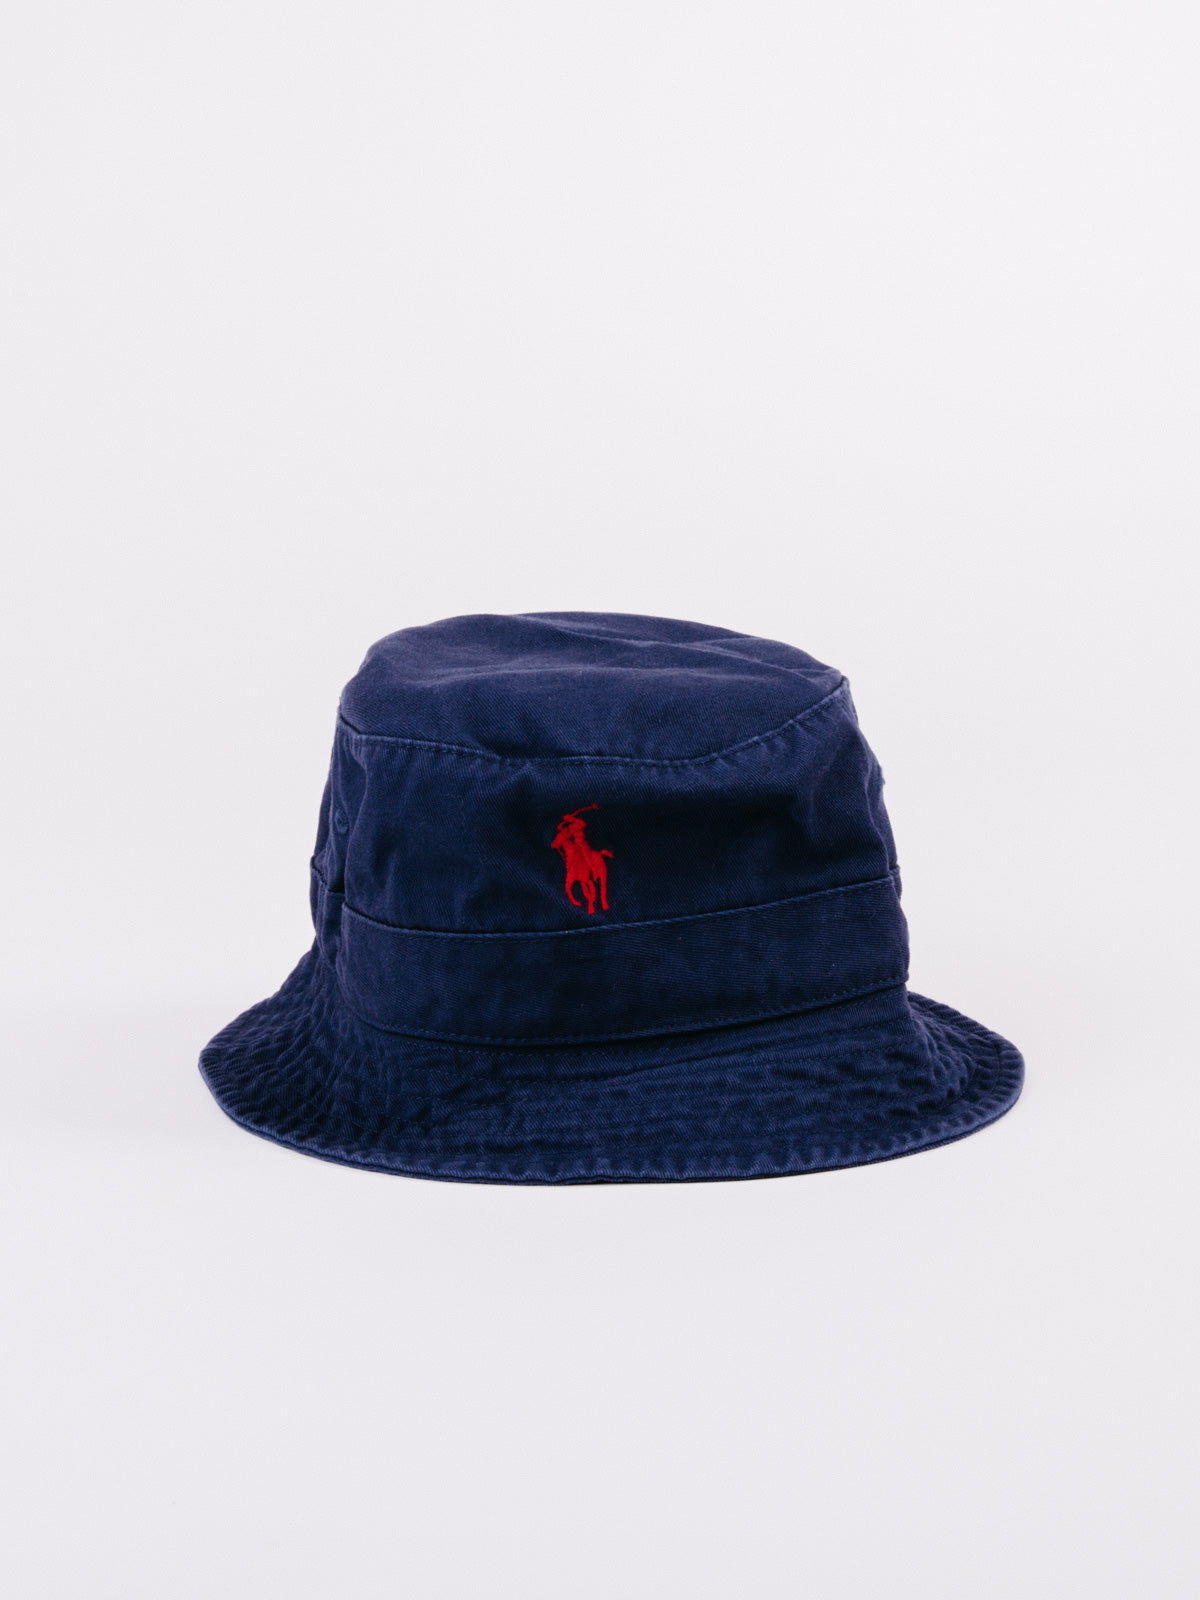 Classic Polo Loft Bucket Hat Navy